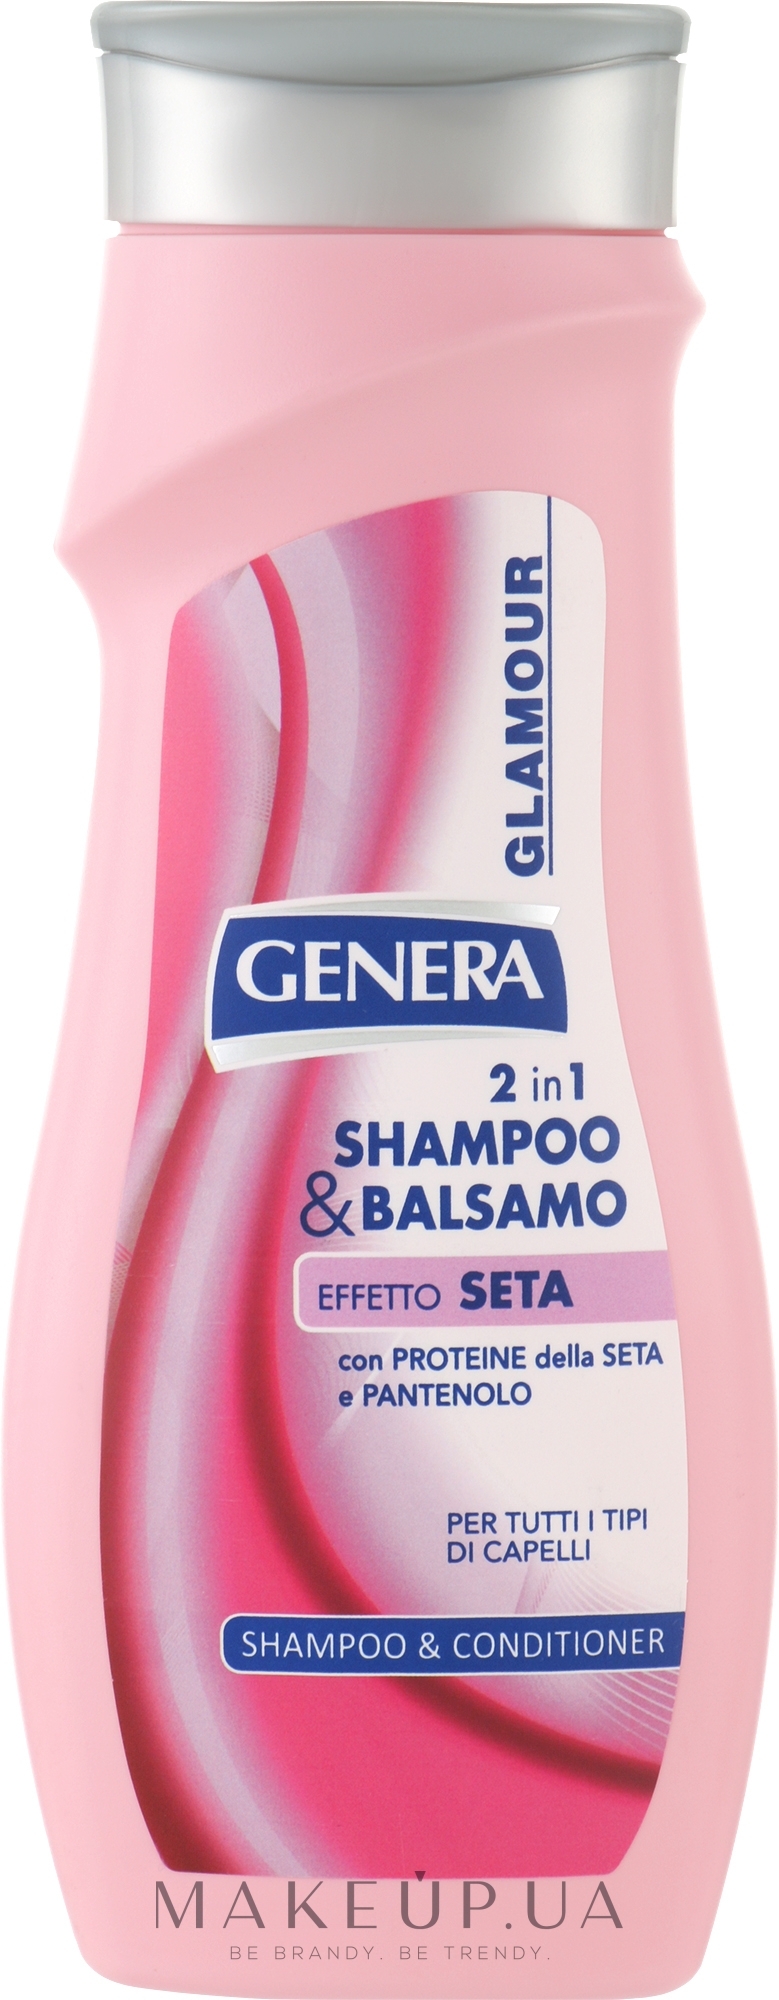 Шампунь-бальзам 2 в 1 - Genera Glamour 2 in 1 Shampoo & Balsamo — фото 300ml